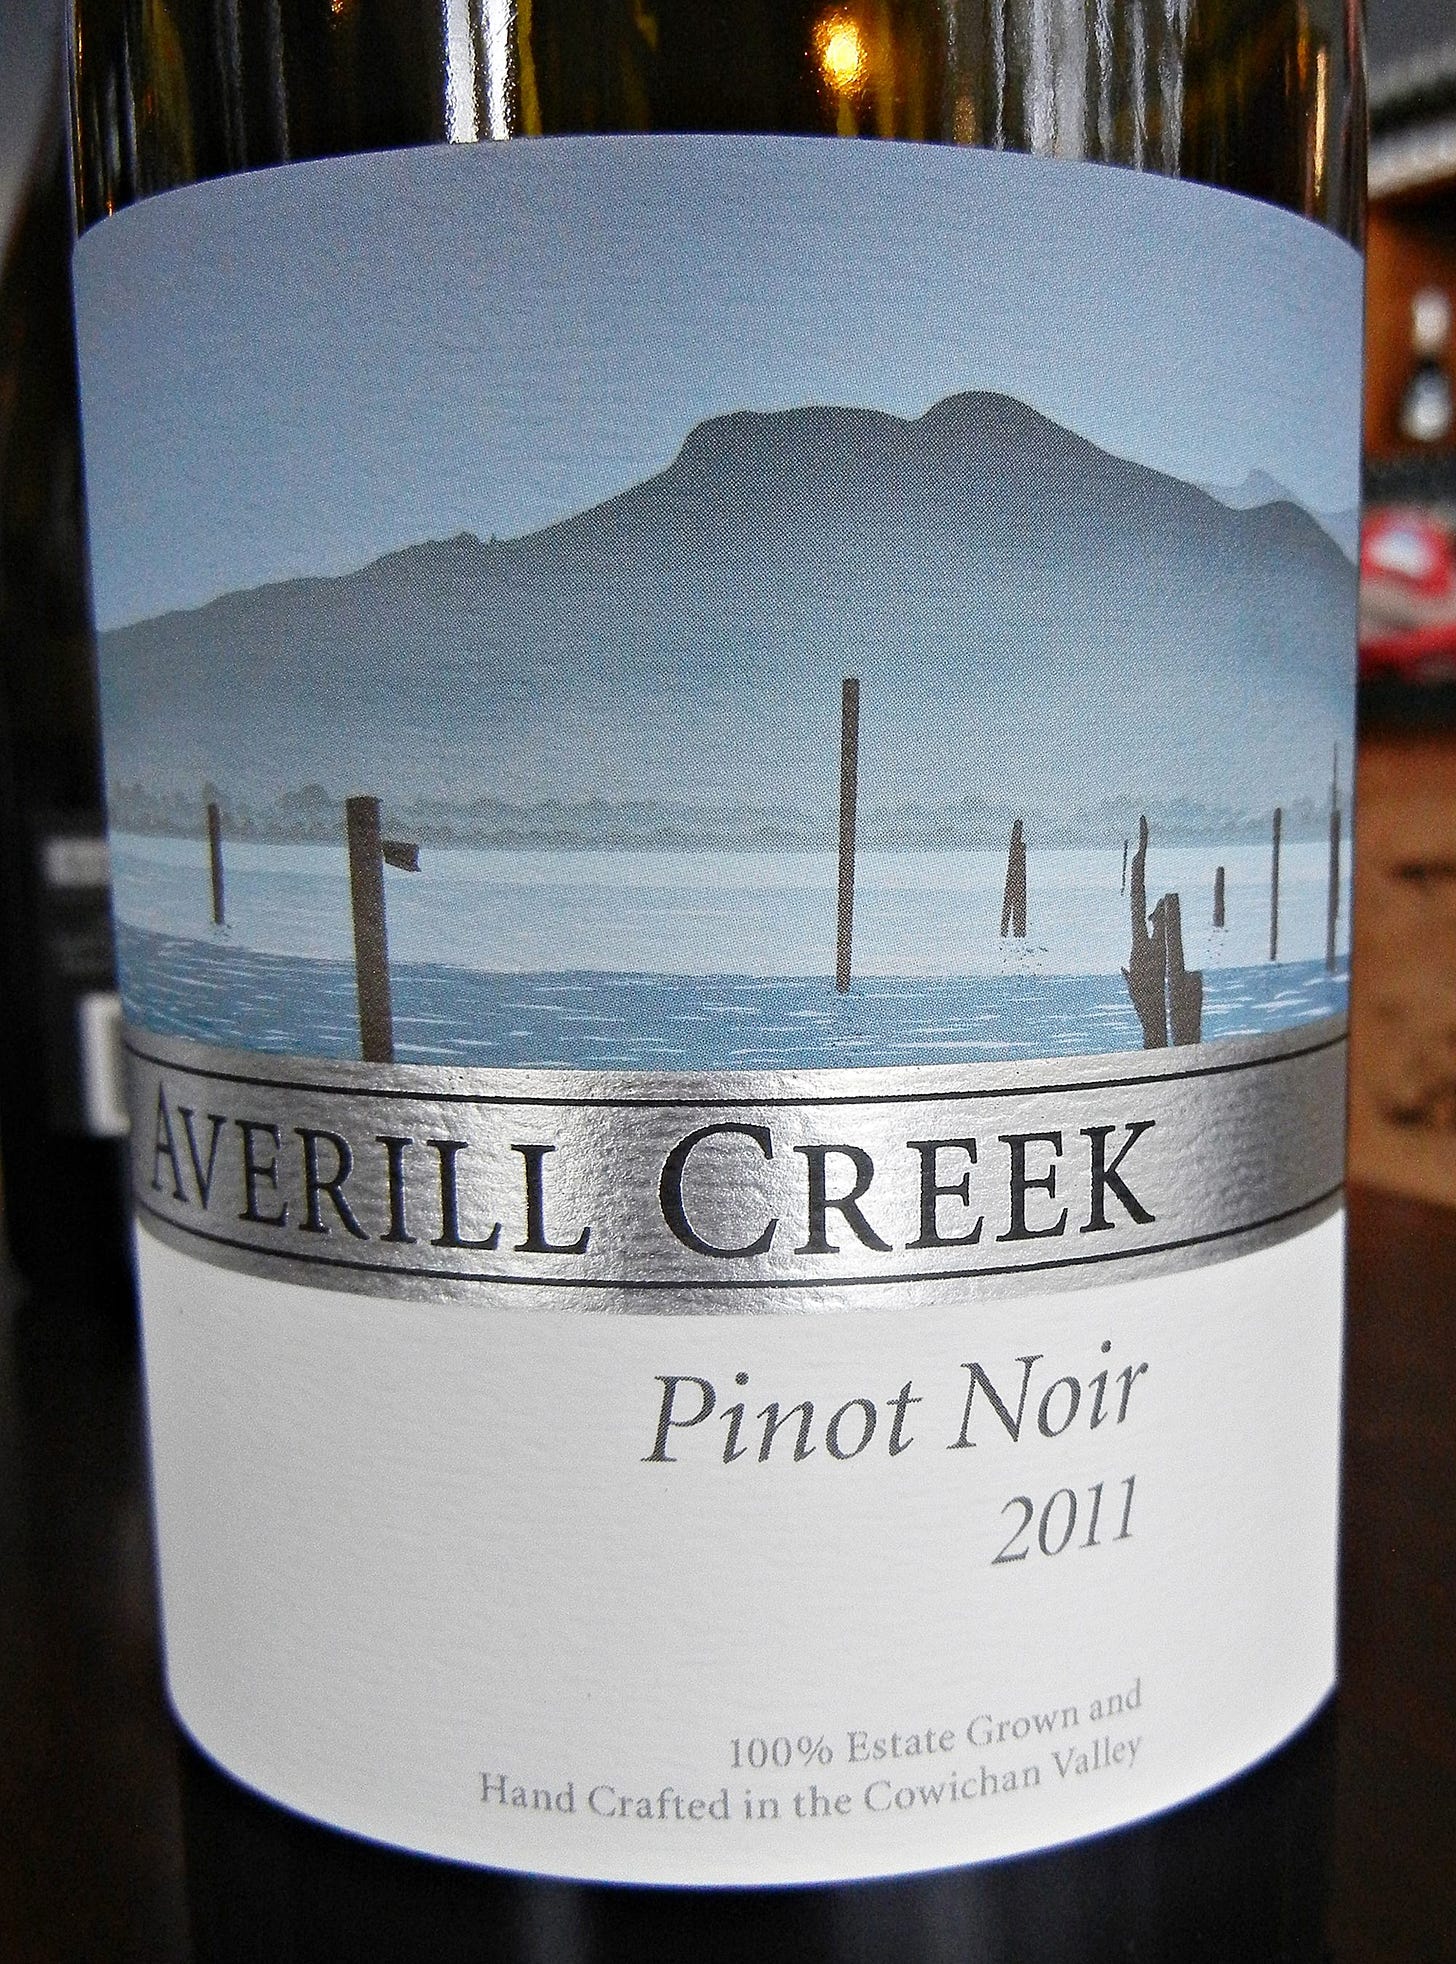 Averill Creek Pinot Noir 2011 Label - BC Pinot Noir Tasting Review 24